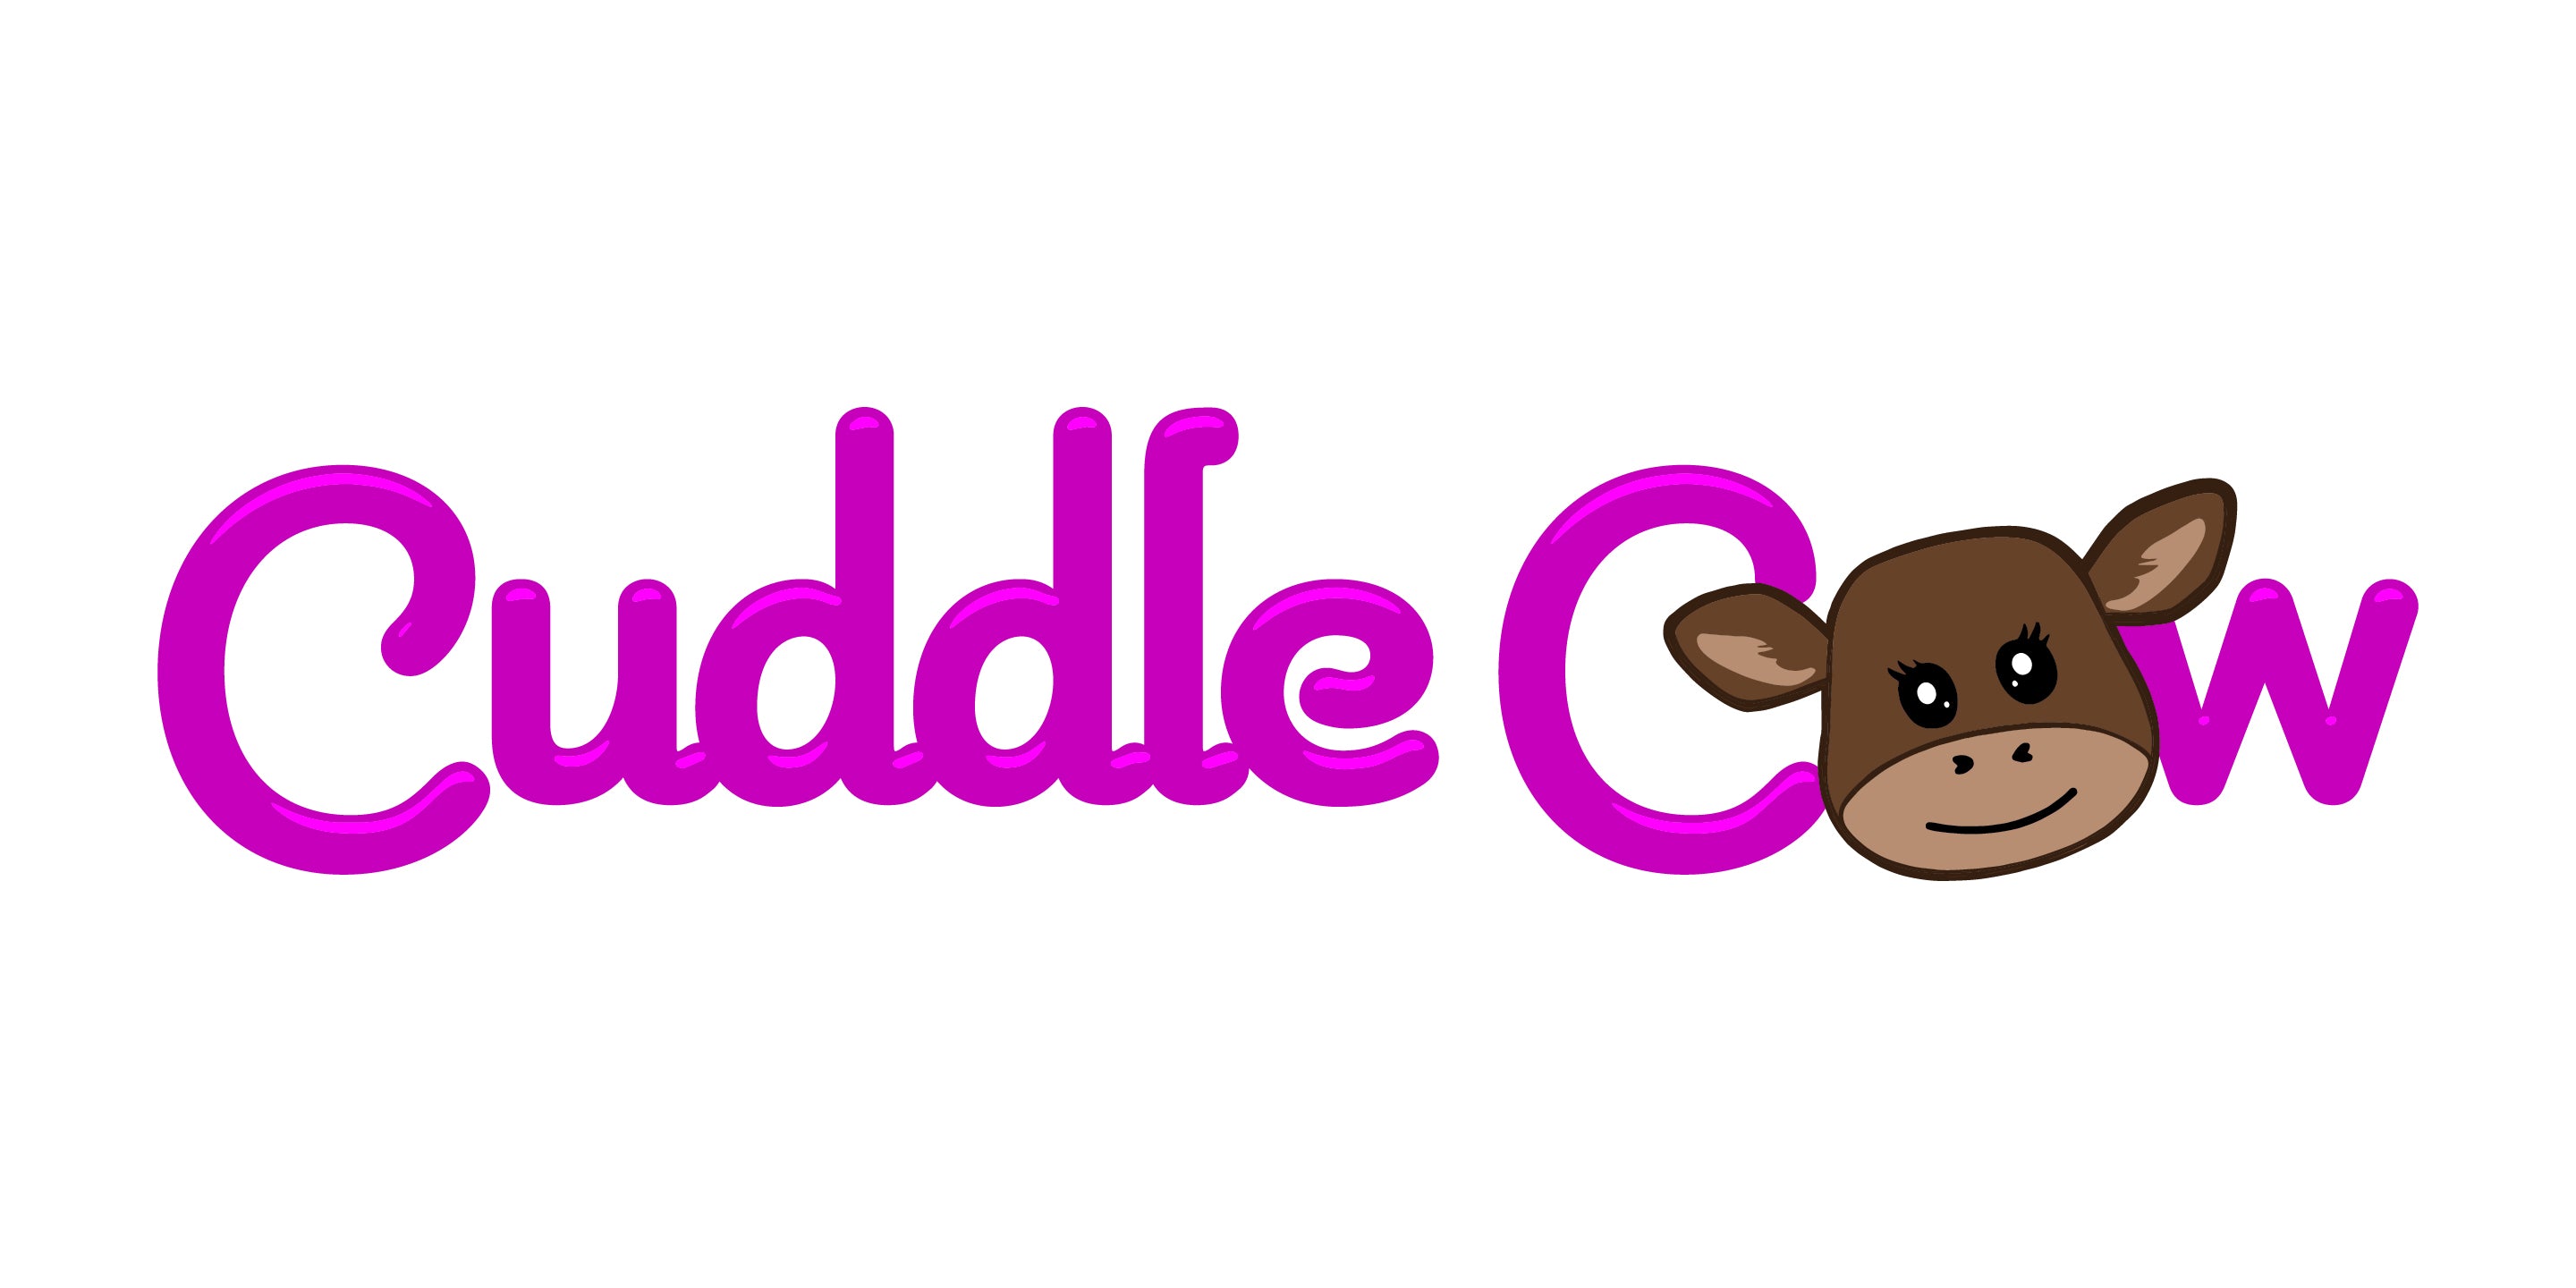 Follow Your Dreams T-shirt – CuddleCowCompany